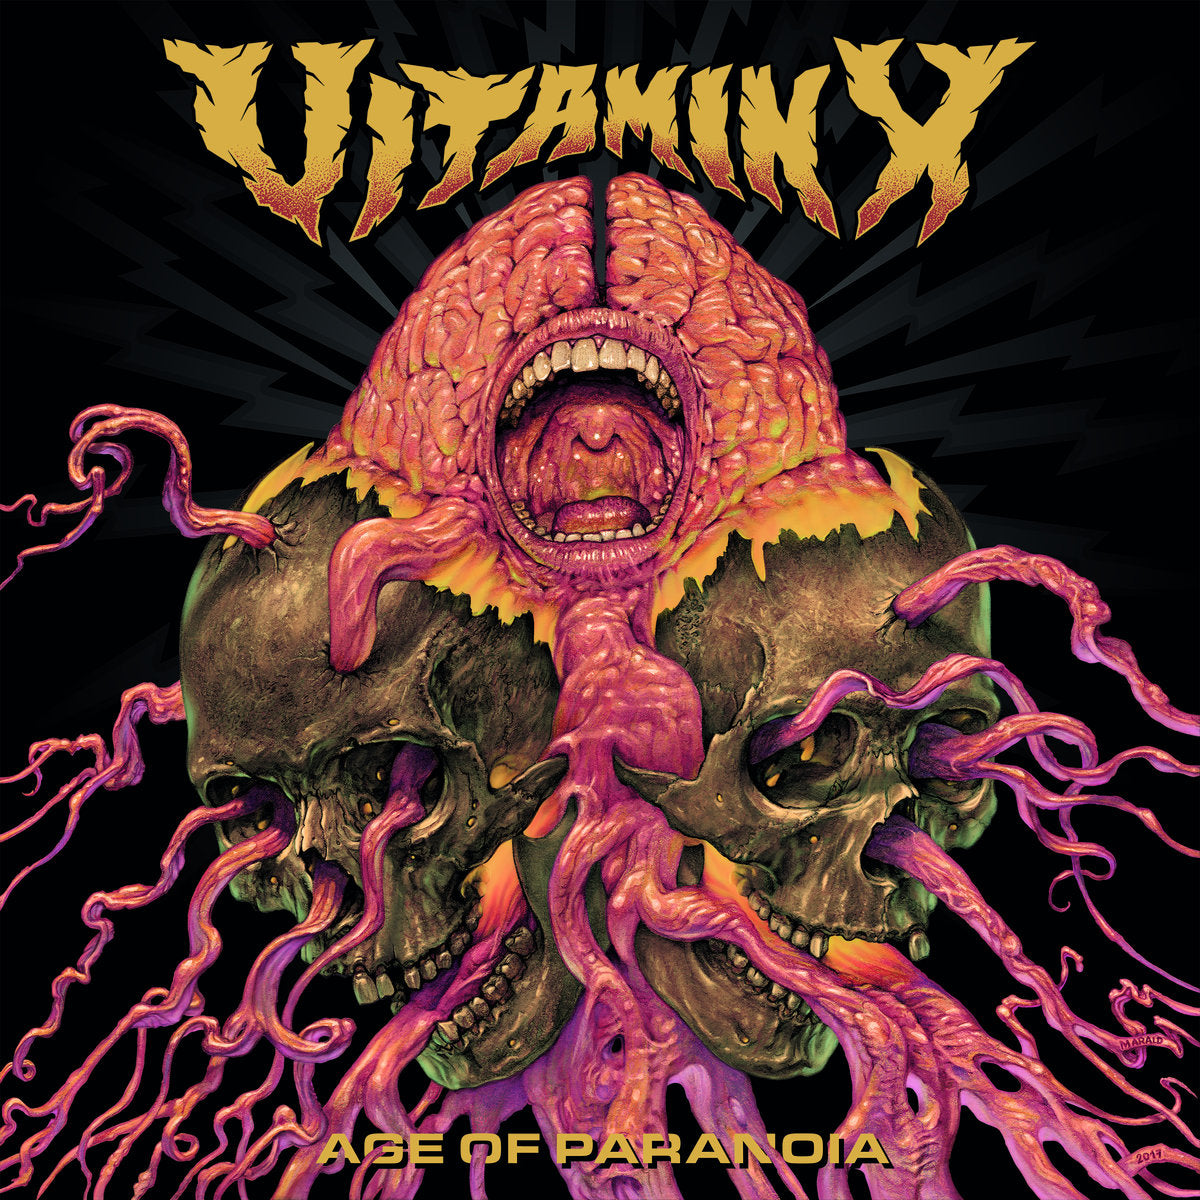 Vitamin X "Age of Paranoia" 12" Vinyl